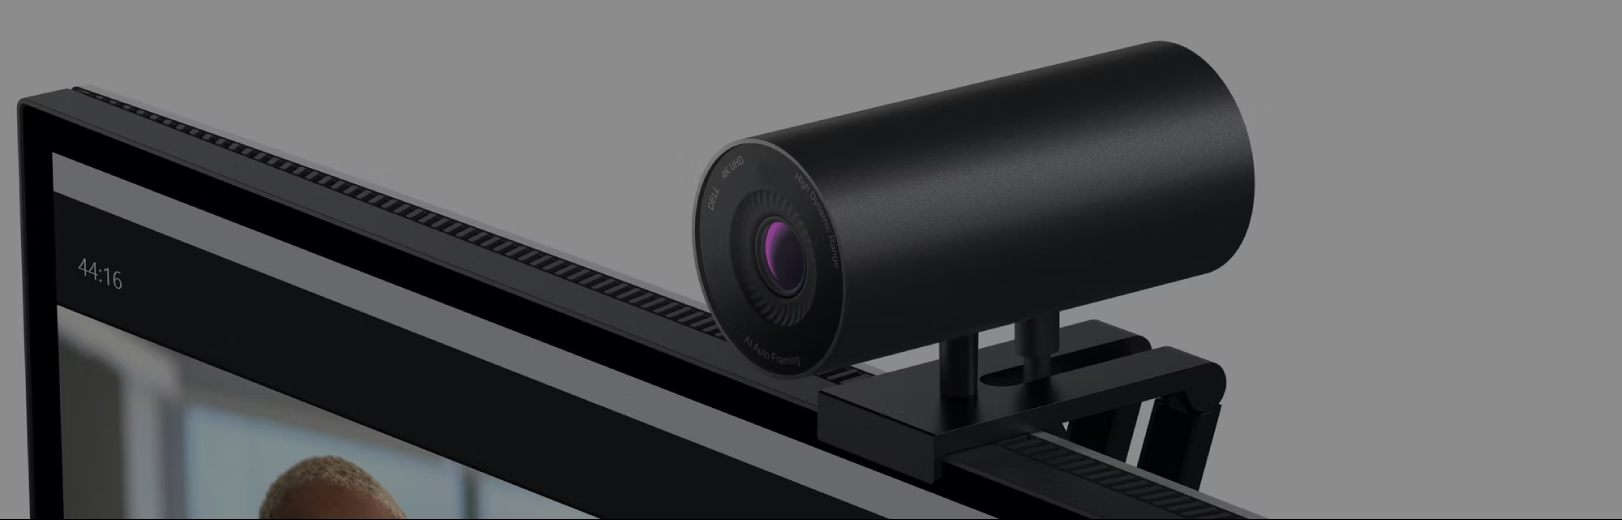 Webcam Dell UltraSharp WB7022 3840 x 2160 pixels 1